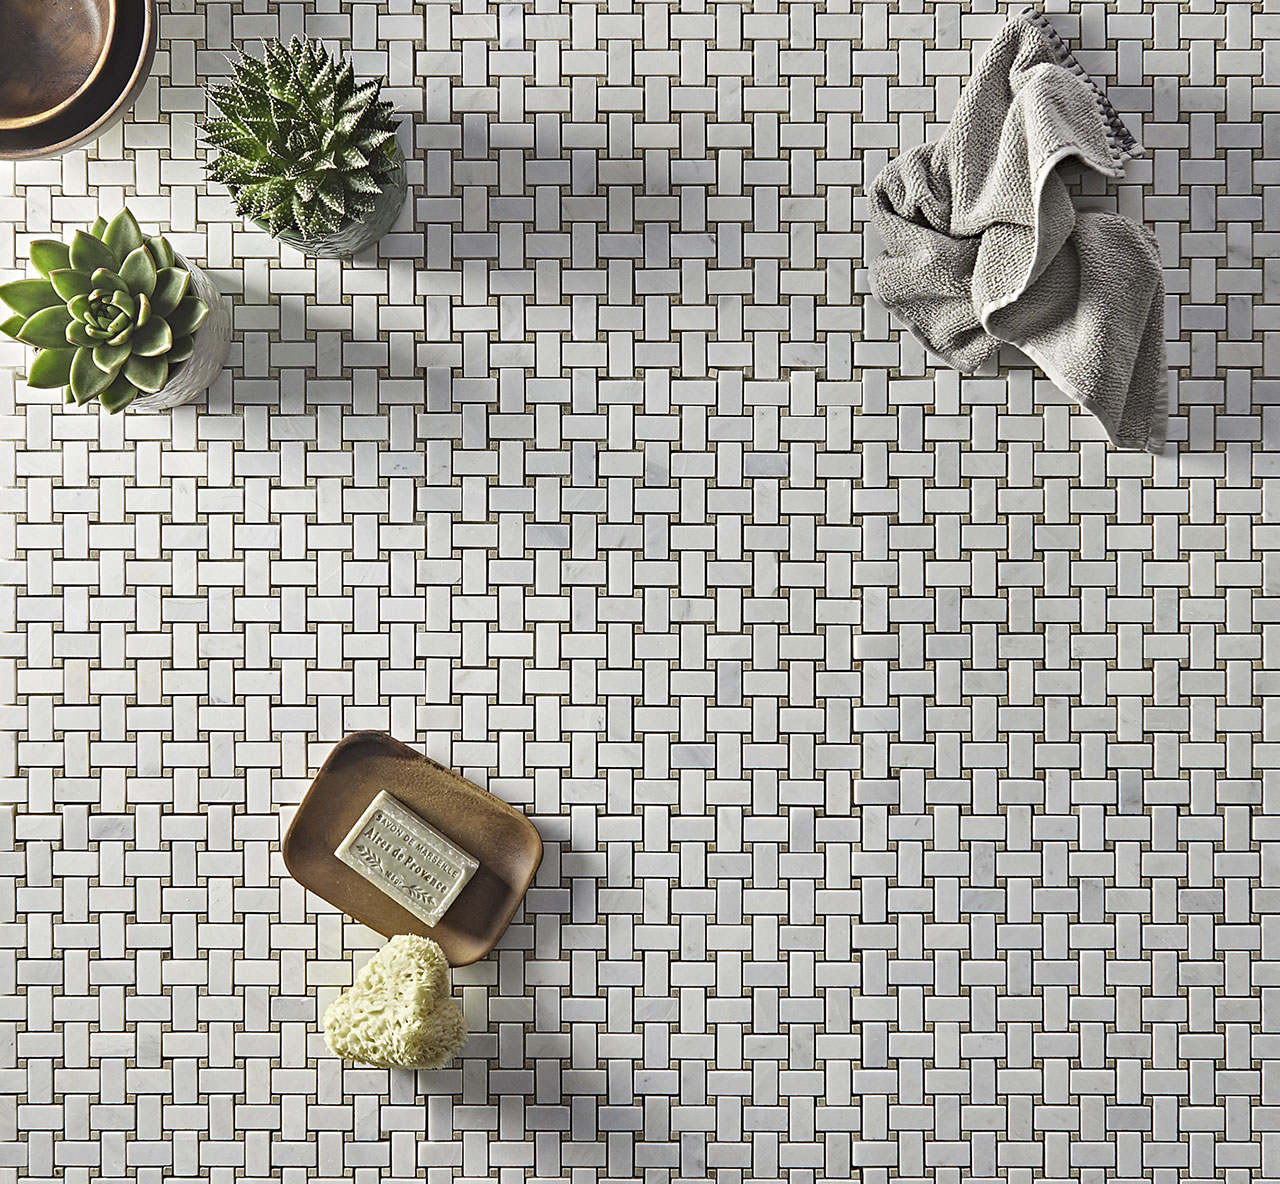 Hampton Emprador Marble Mosaic Tiles used as stunning shower floor tiles in a bathroom